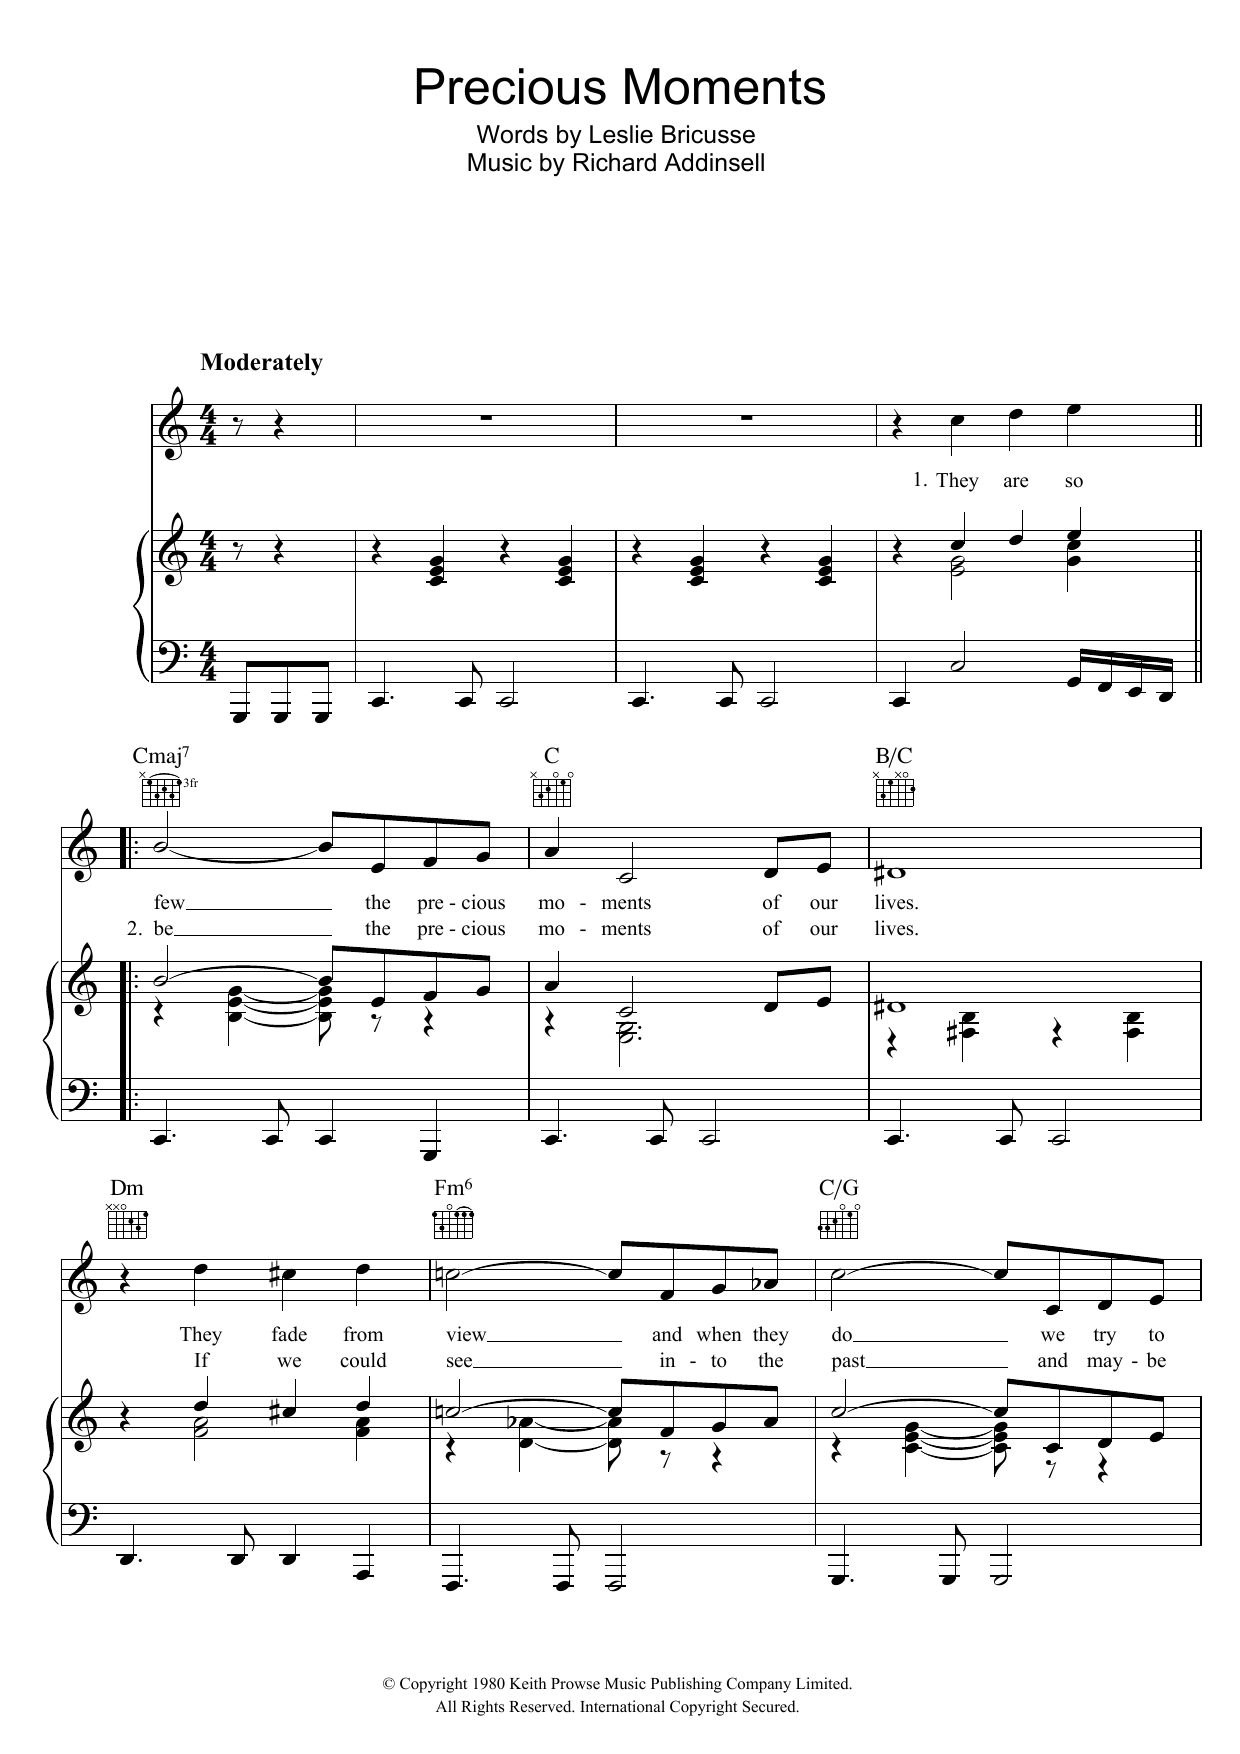 Matt Monro Precious Moments Sheet Music Notes & Chords for Piano, Vocal & Guitar (Right-Hand Melody) - Download or Print PDF